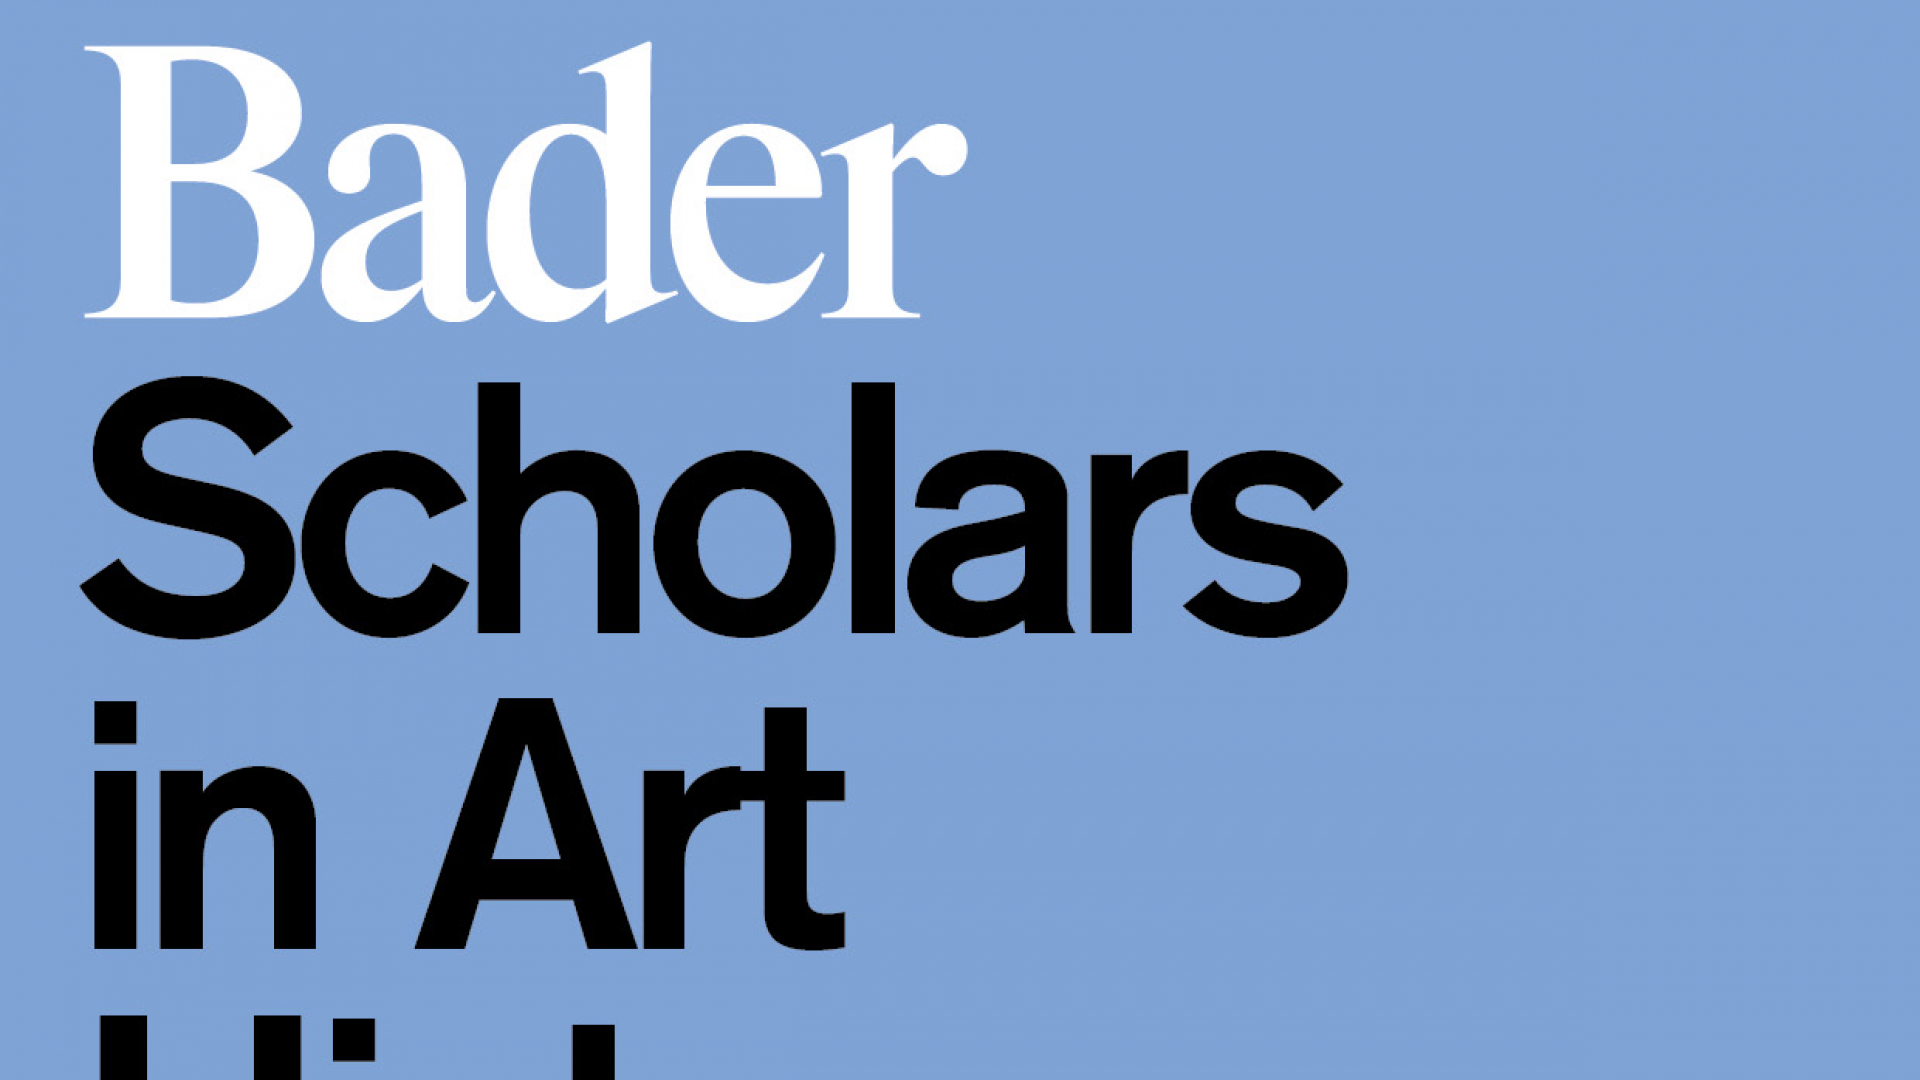 Bader Scholars in Art History